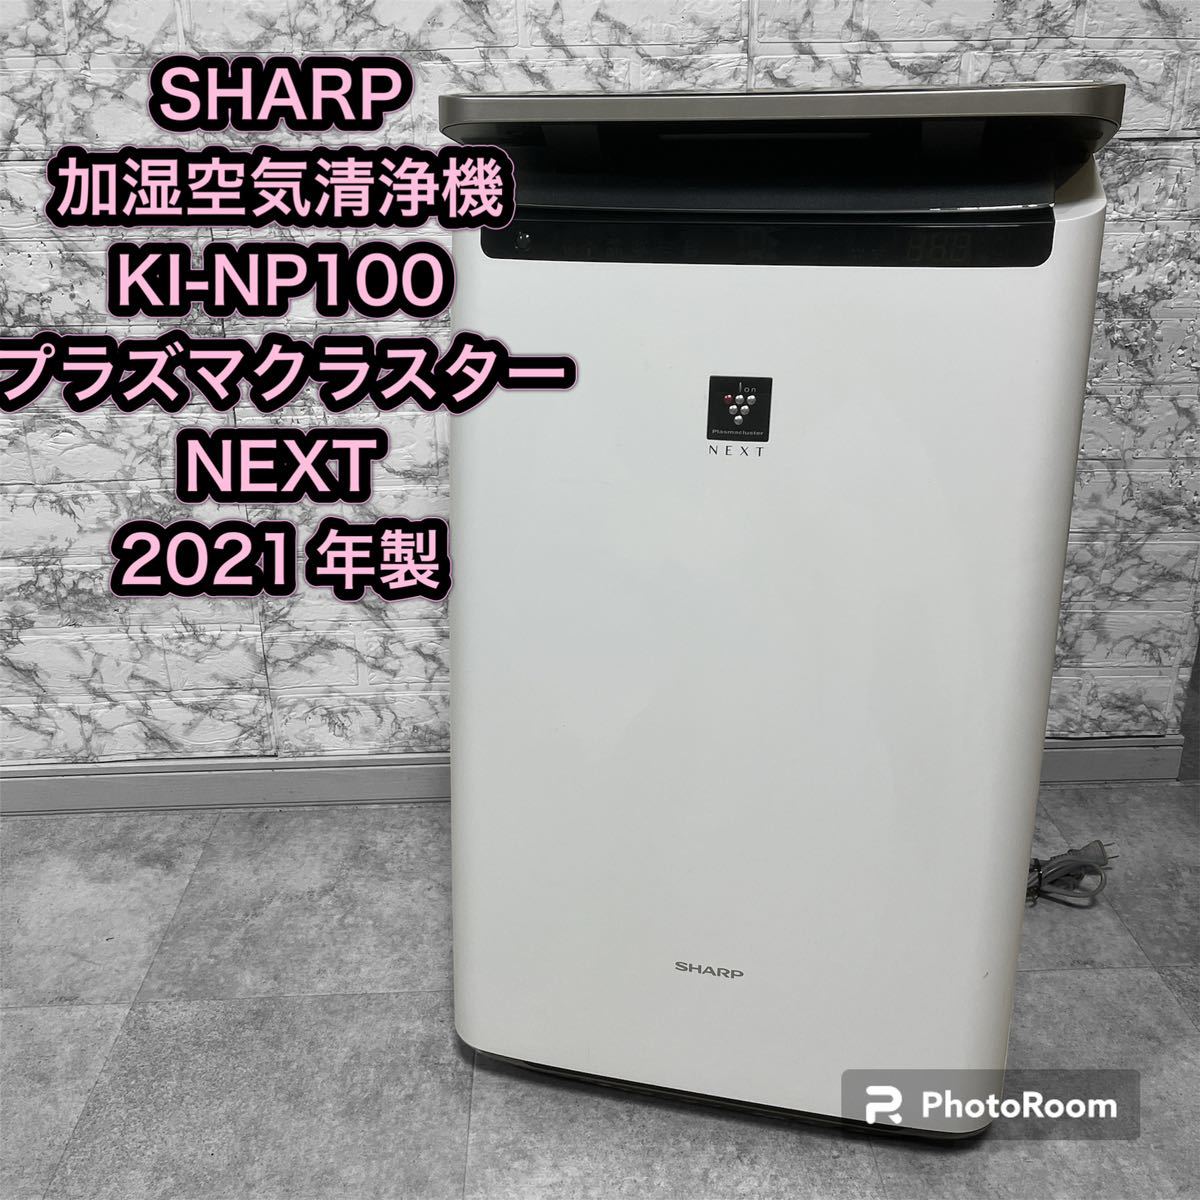 SHARP シャープKI-LP100-Wプラズマクラスター NEXT - 生活家電